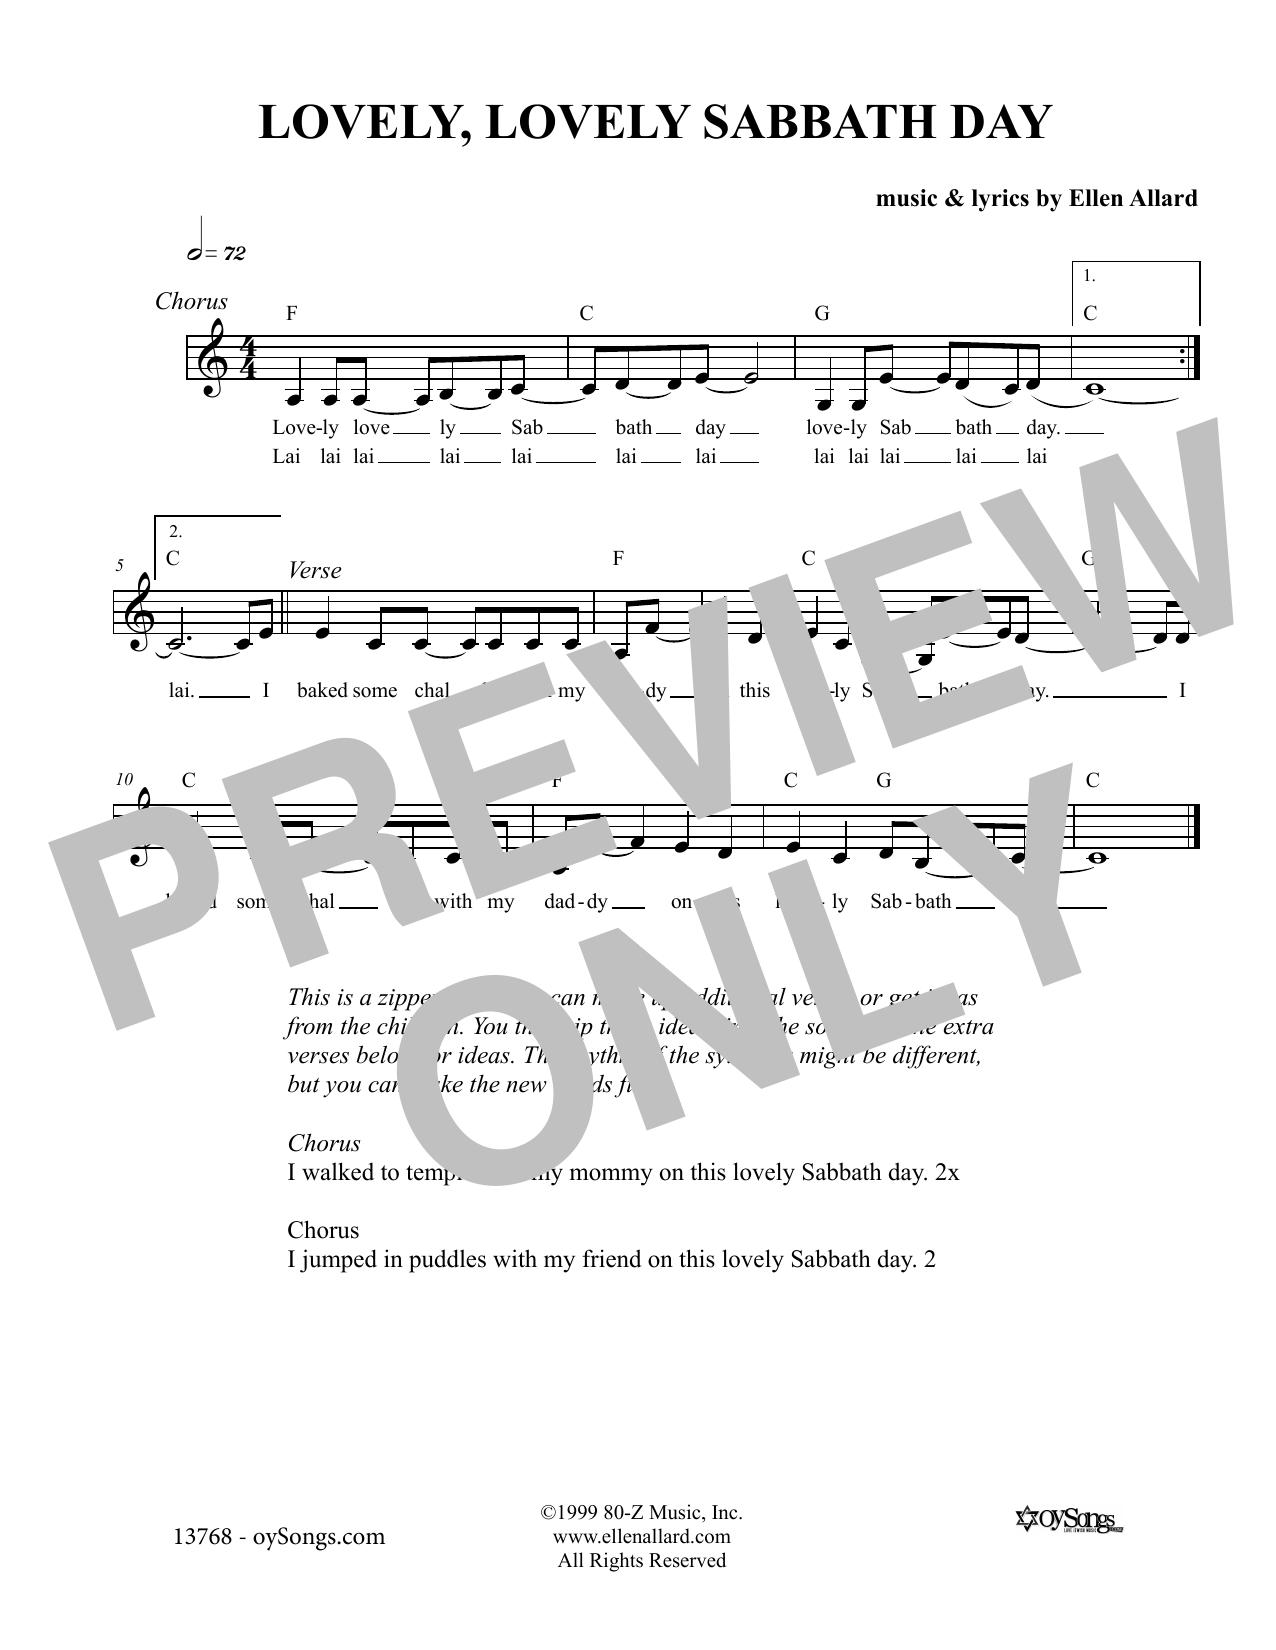 Ellen Allard Lovely Lovely Sabbath Day Sheet Music Notes & Chords for Melody Line, Lyrics & Chords - Download or Print PDF